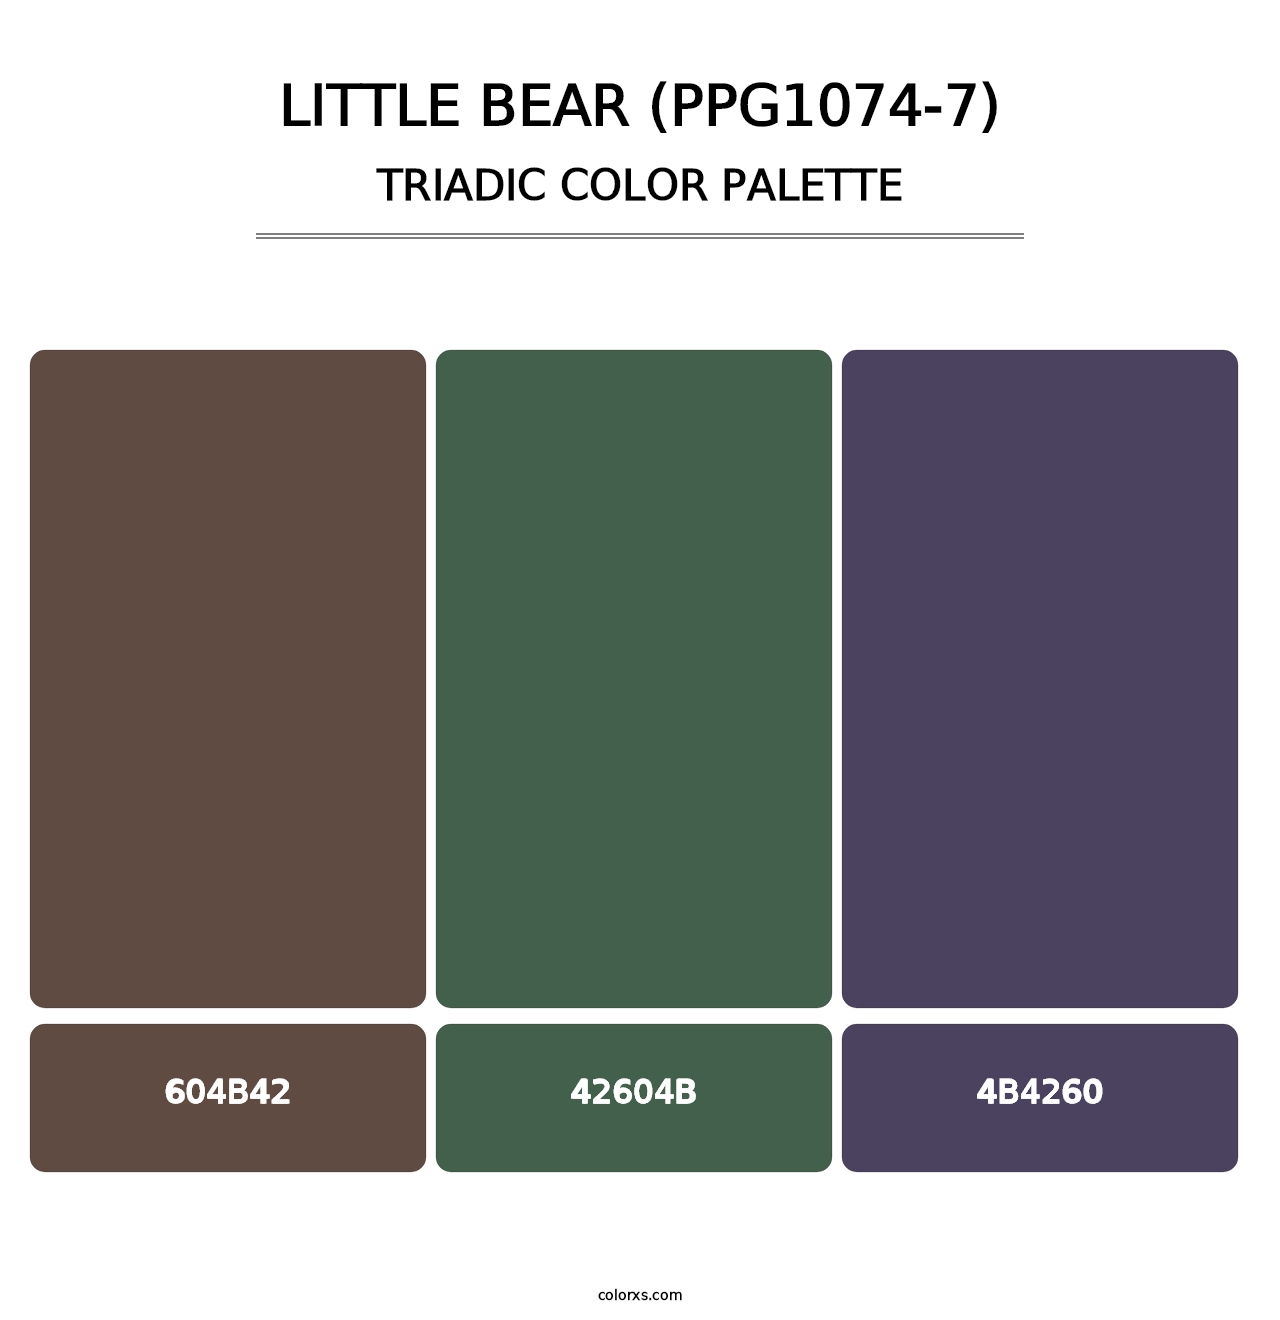 Little Bear (PPG1074-7) - Triadic Color Palette